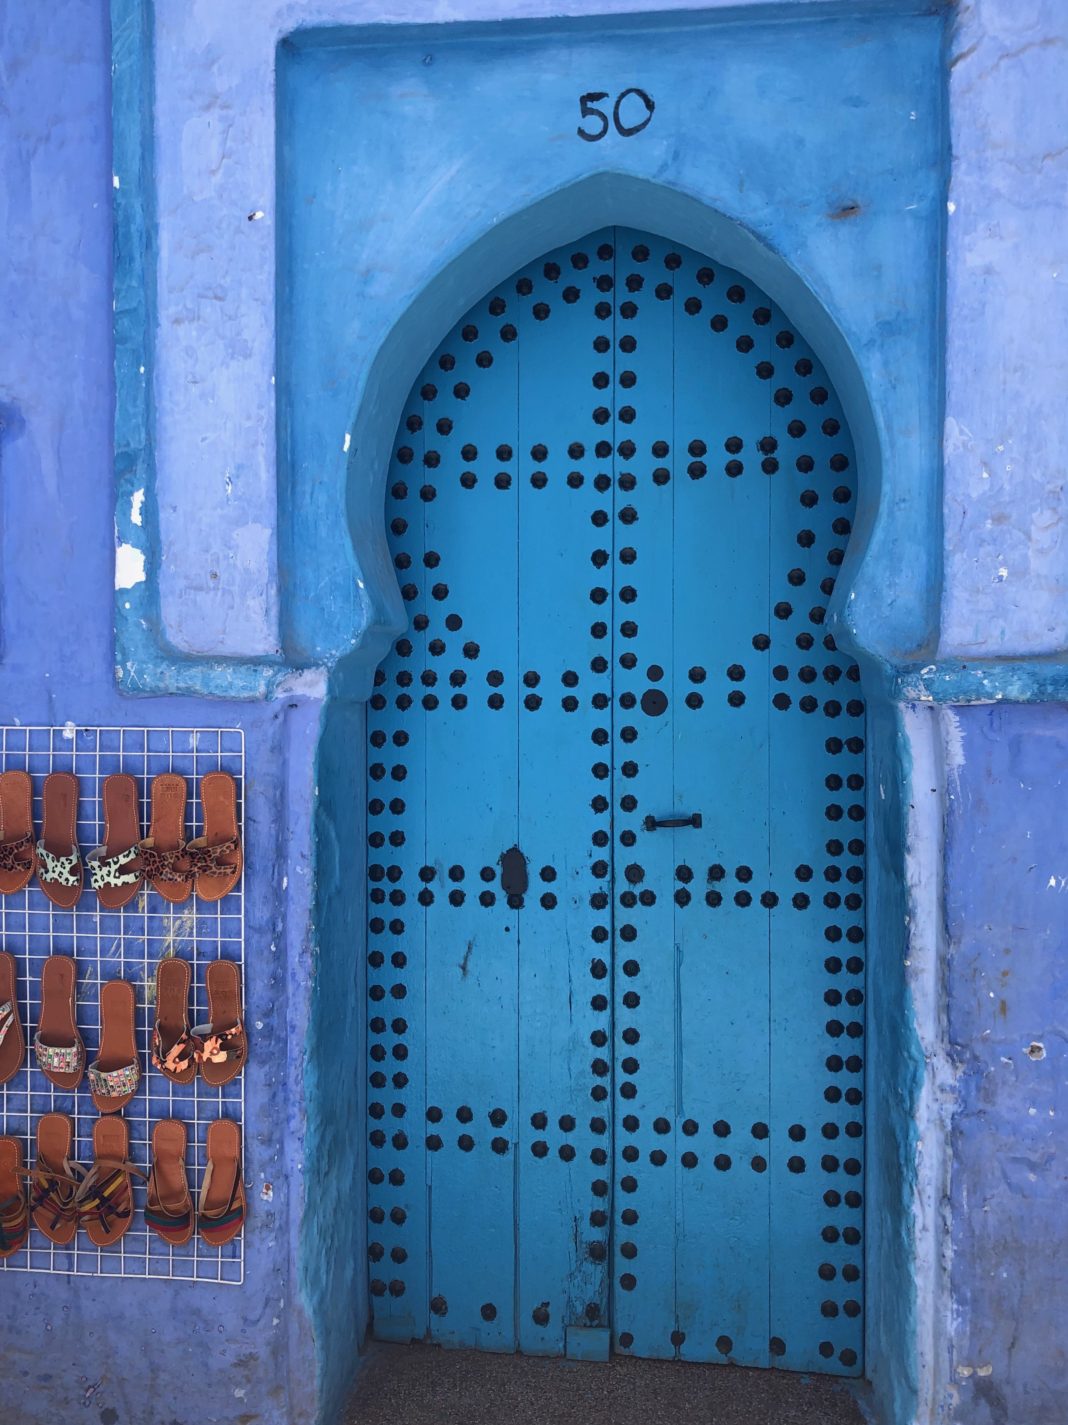 Chefchaouen: The Blue City Morocco. A Thousand Shades of Indigo